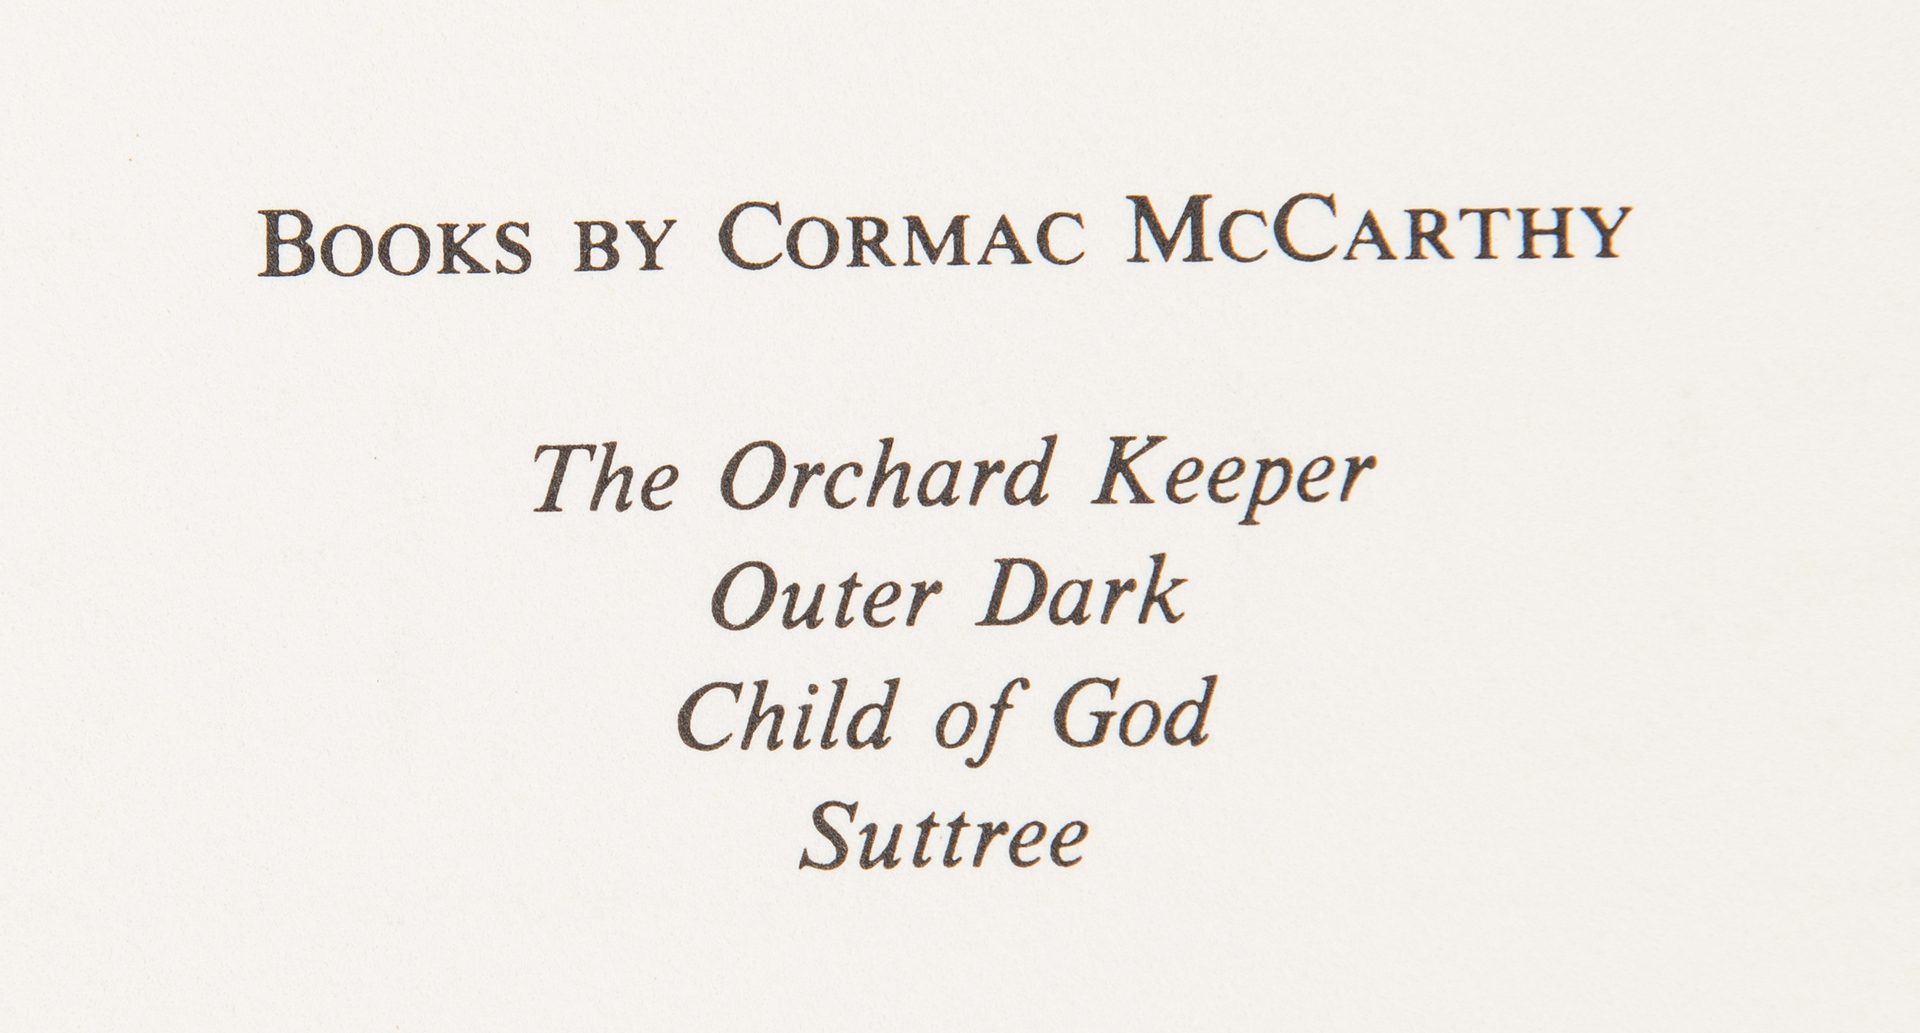 Lot 750: Cormac McCarthy, Suttree, 1st Ed., 1979